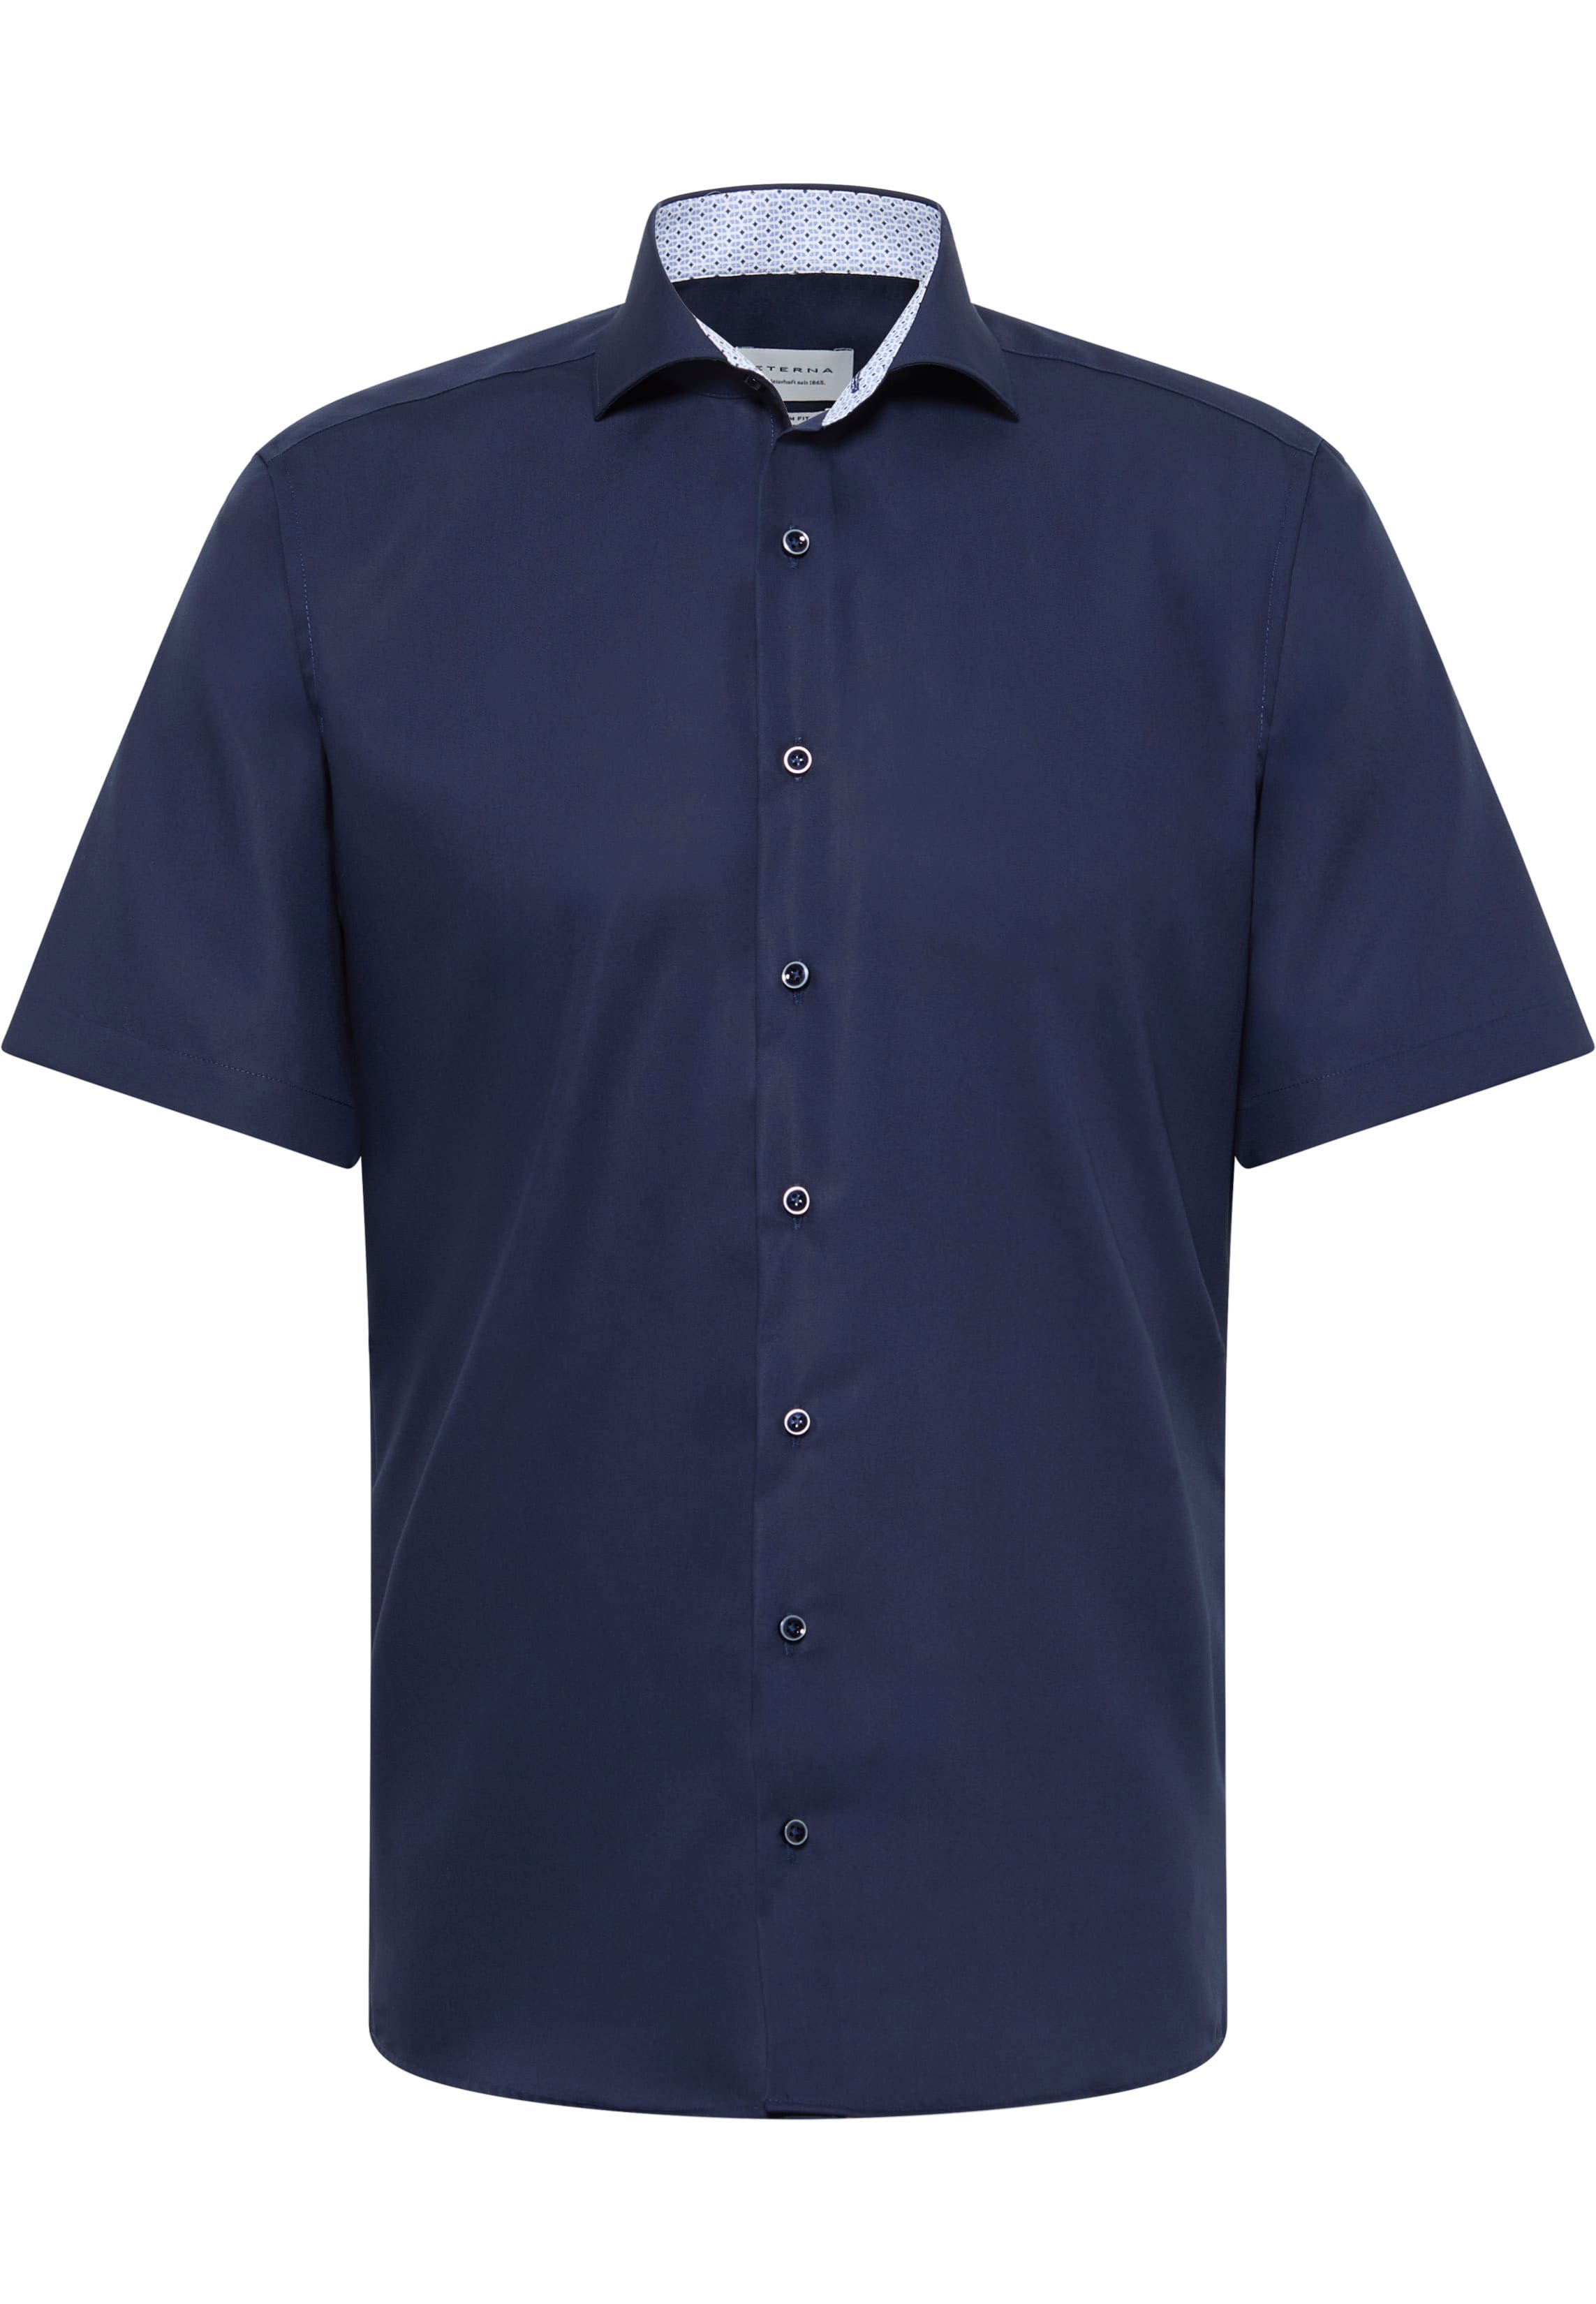 SLIM FIT Original Shirt Bleu marine uni